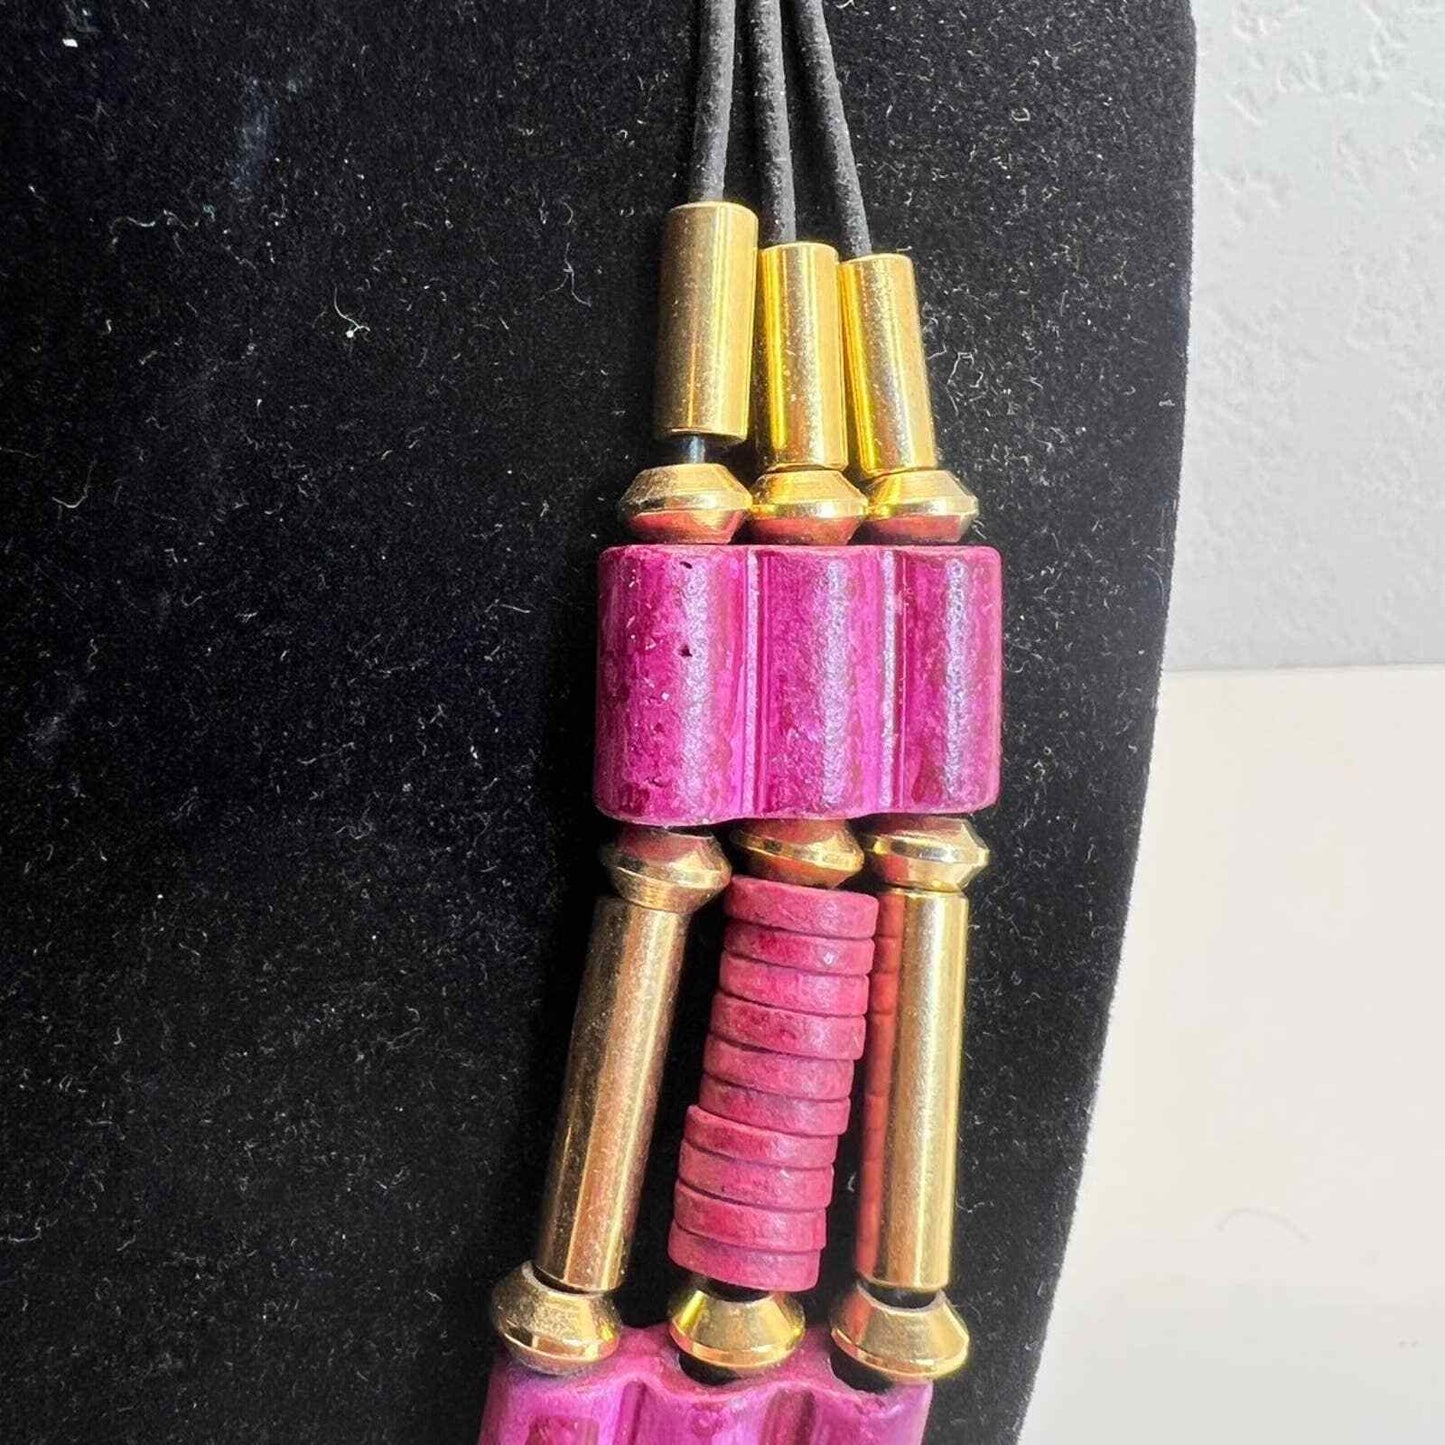 Necklace Women's Jewelry Purple Clay Beads Art Deco Multi Strand Vintage Costume